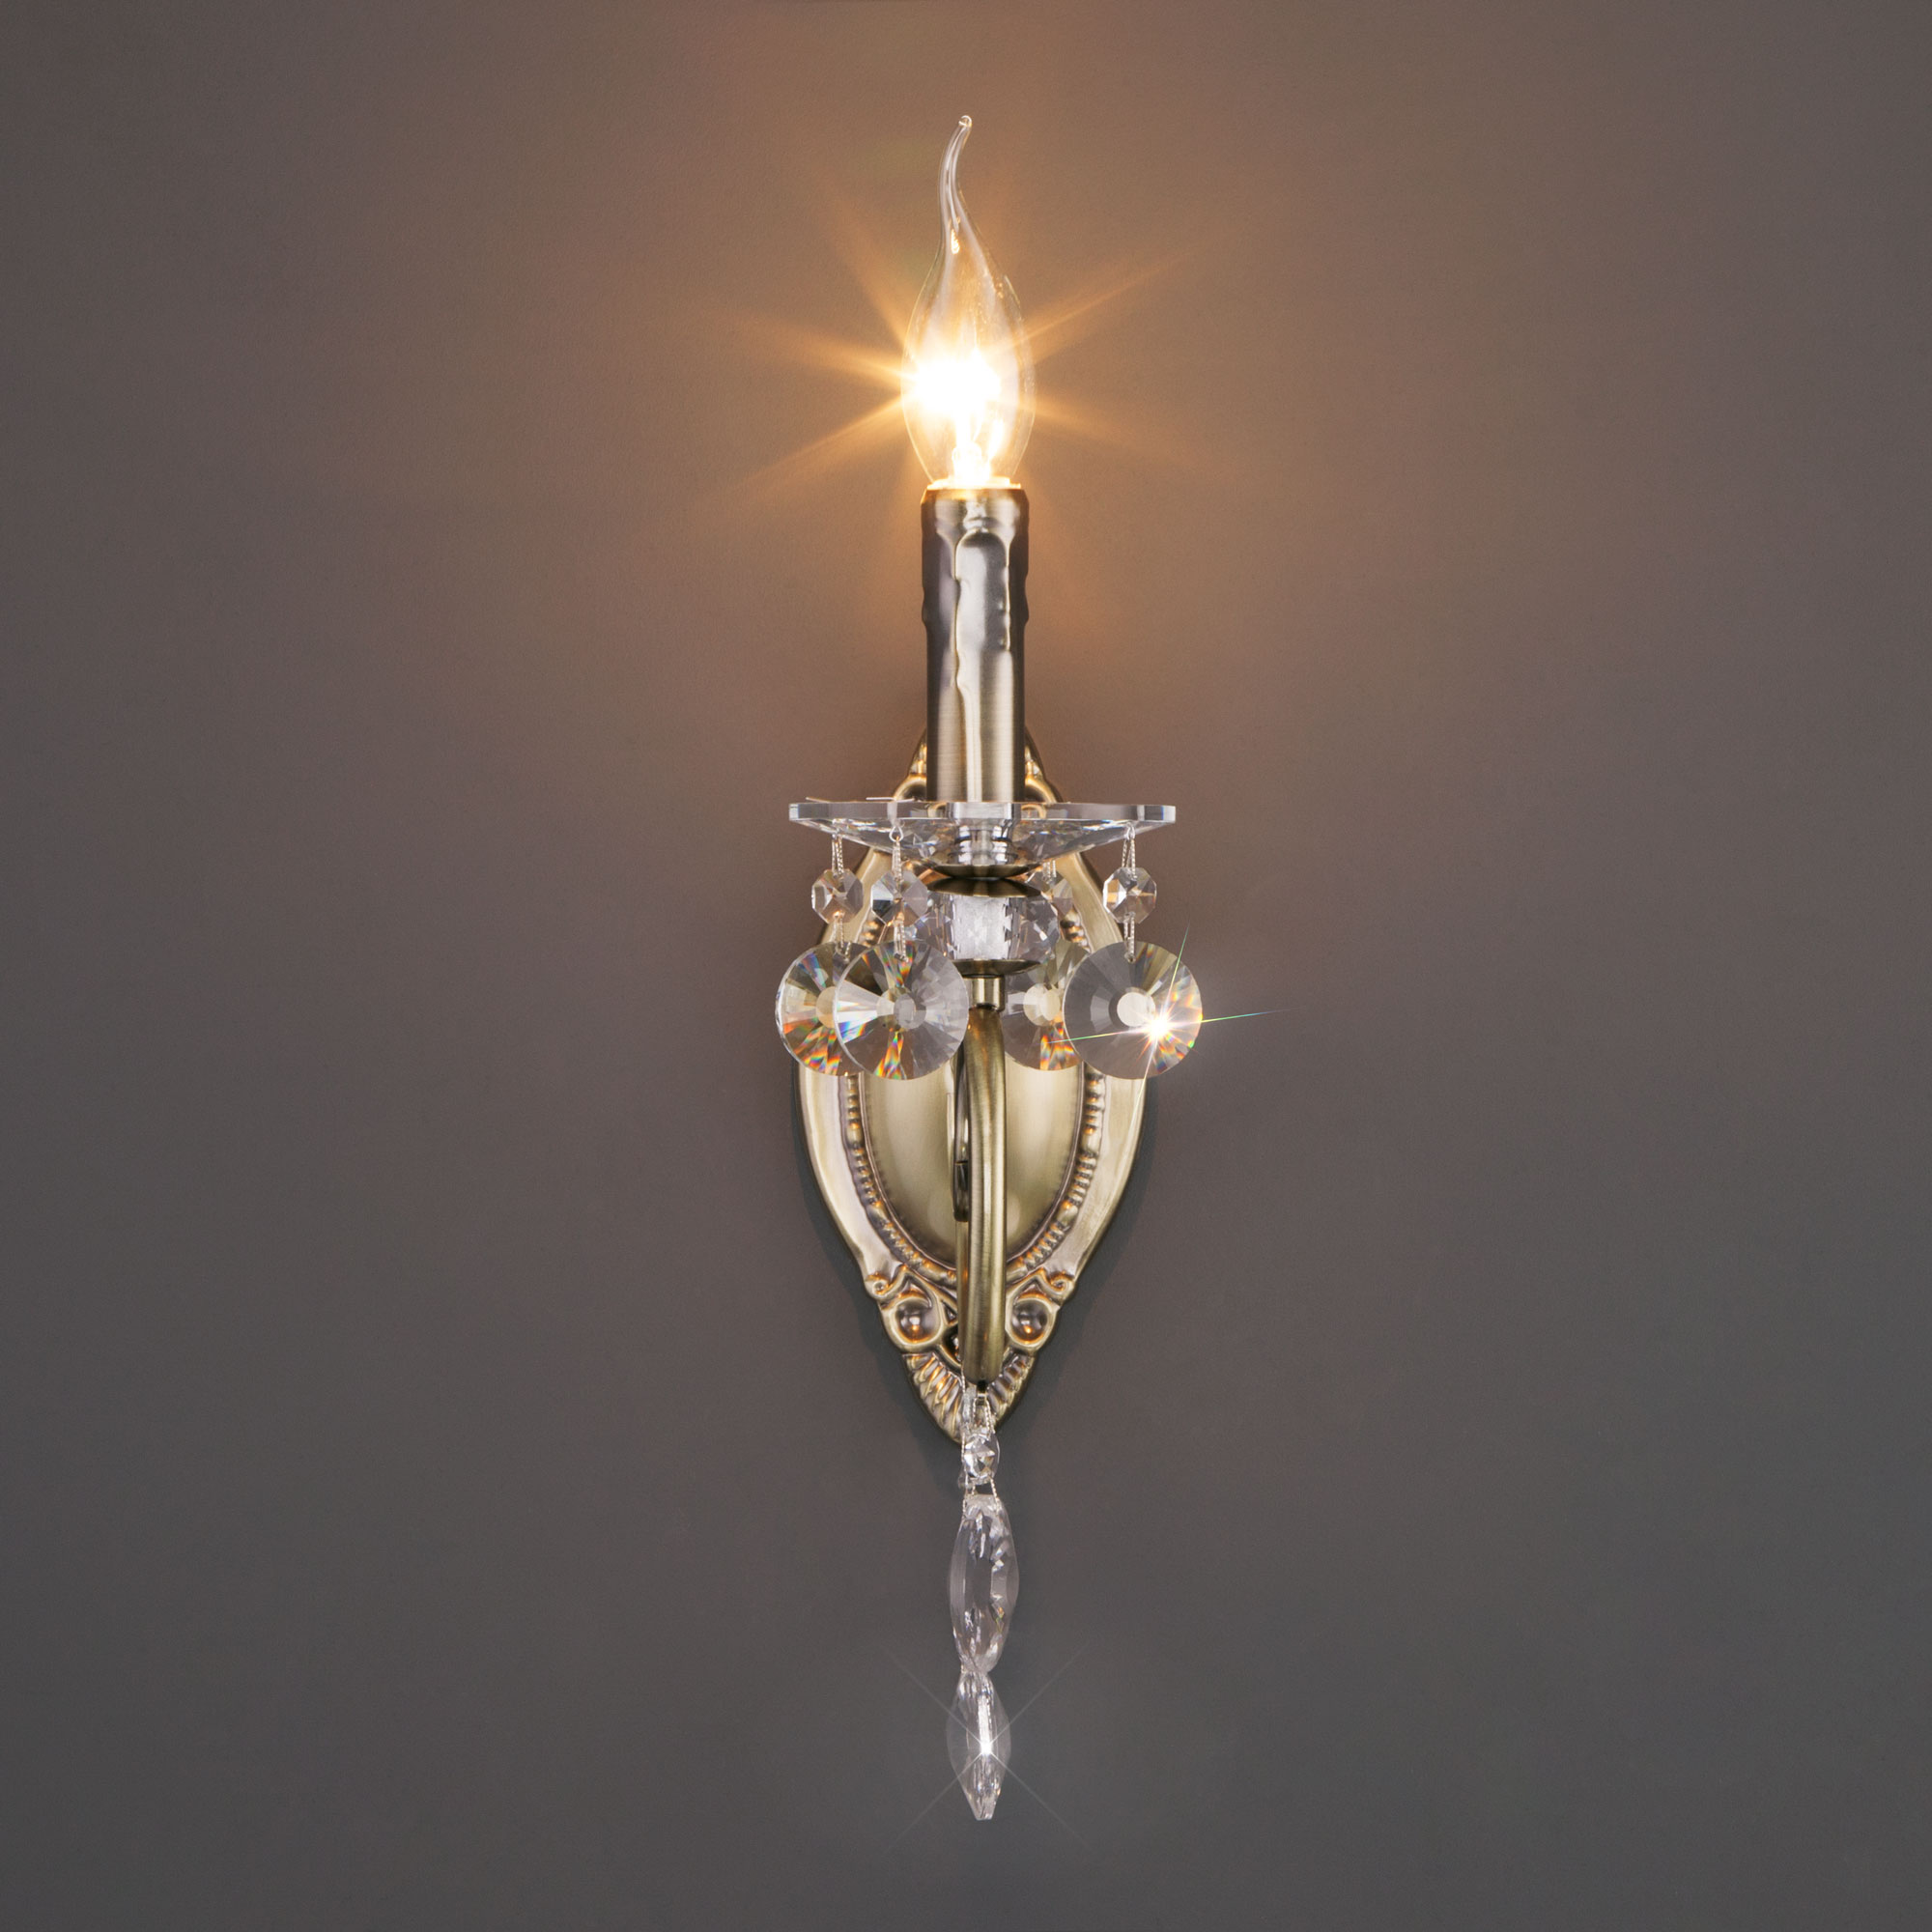 Настенный светильник Eurosvet 10104/1 античная бронза/прозрачный хрусталь Strotskis